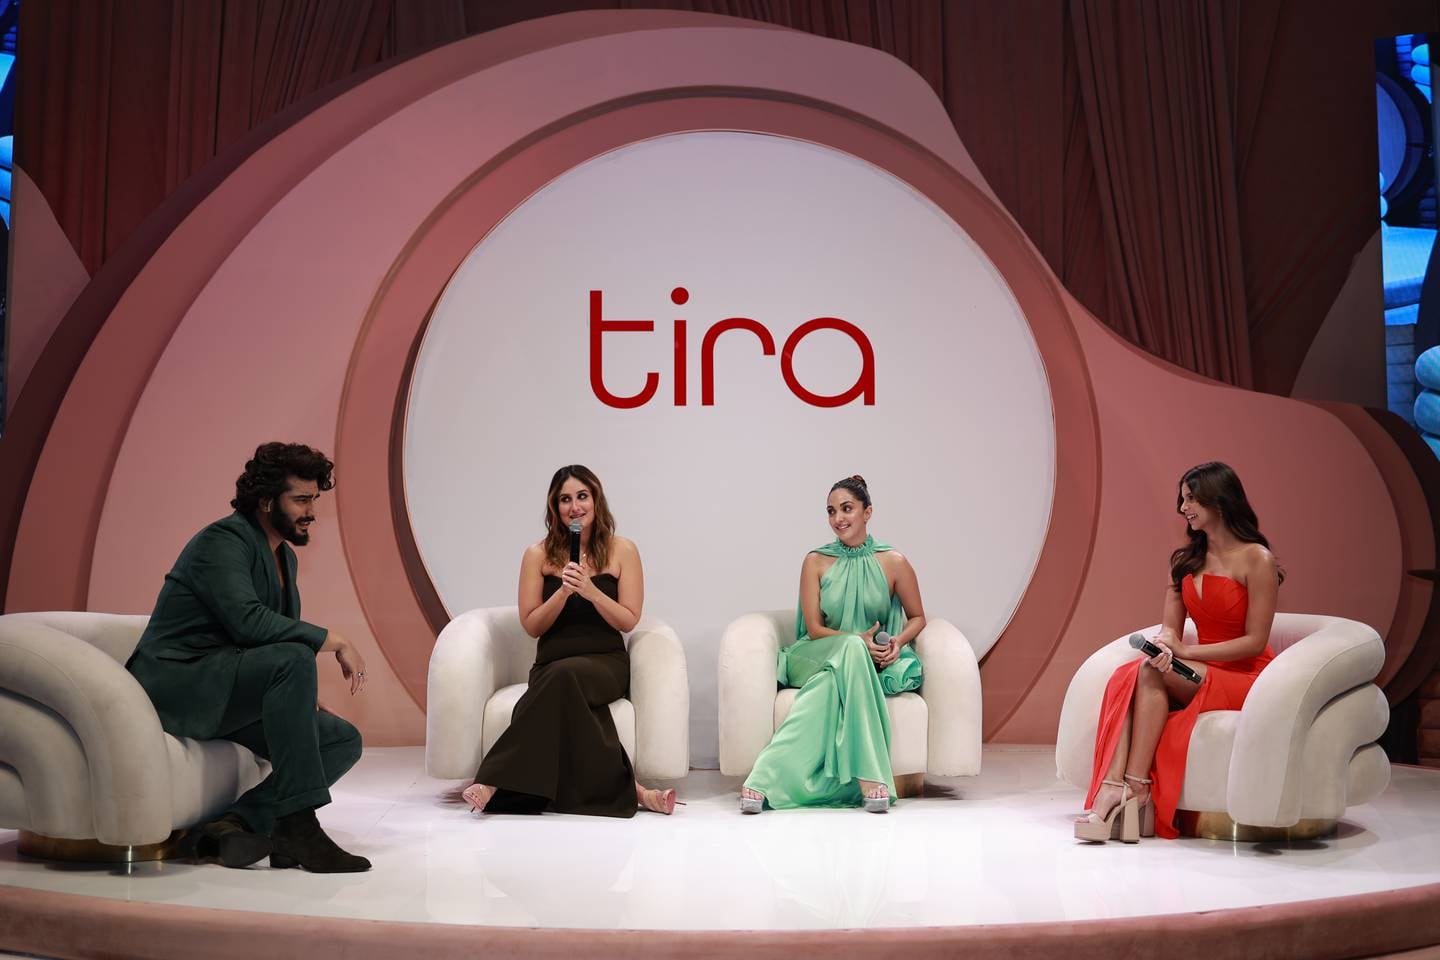 Actor Arjun Kapoor in conversation with Kareena Kapoor Khan, Kiara Advani, and Suhana Khan at Reliance Retail's launch of its Tira campaign event.